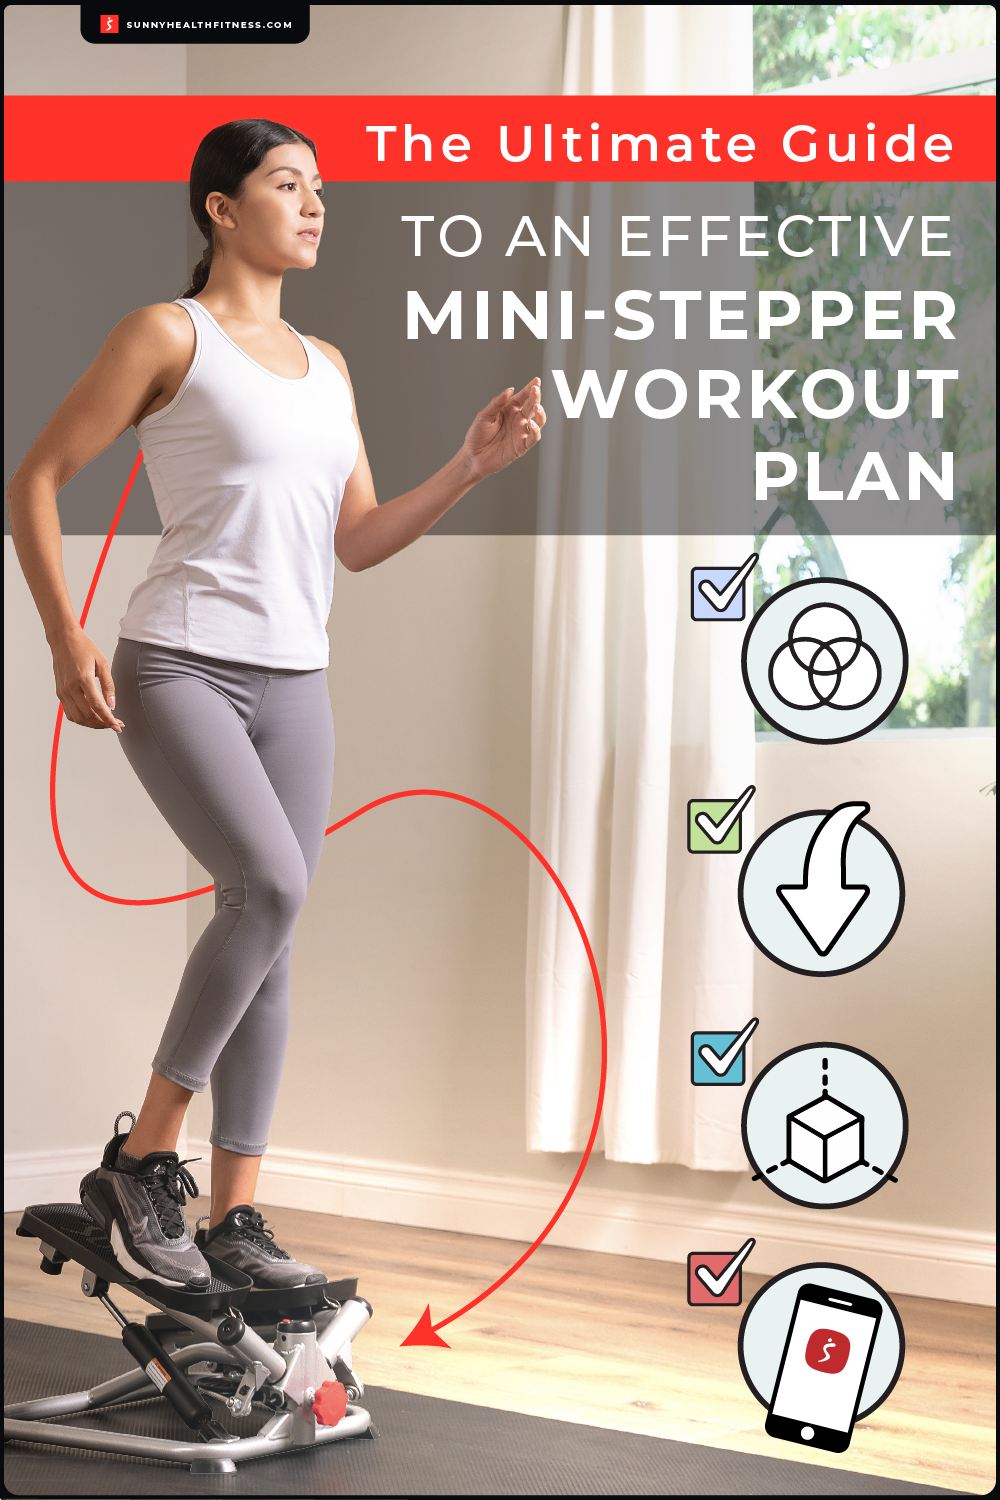 Mini-Stepper Workout Plan Infographic